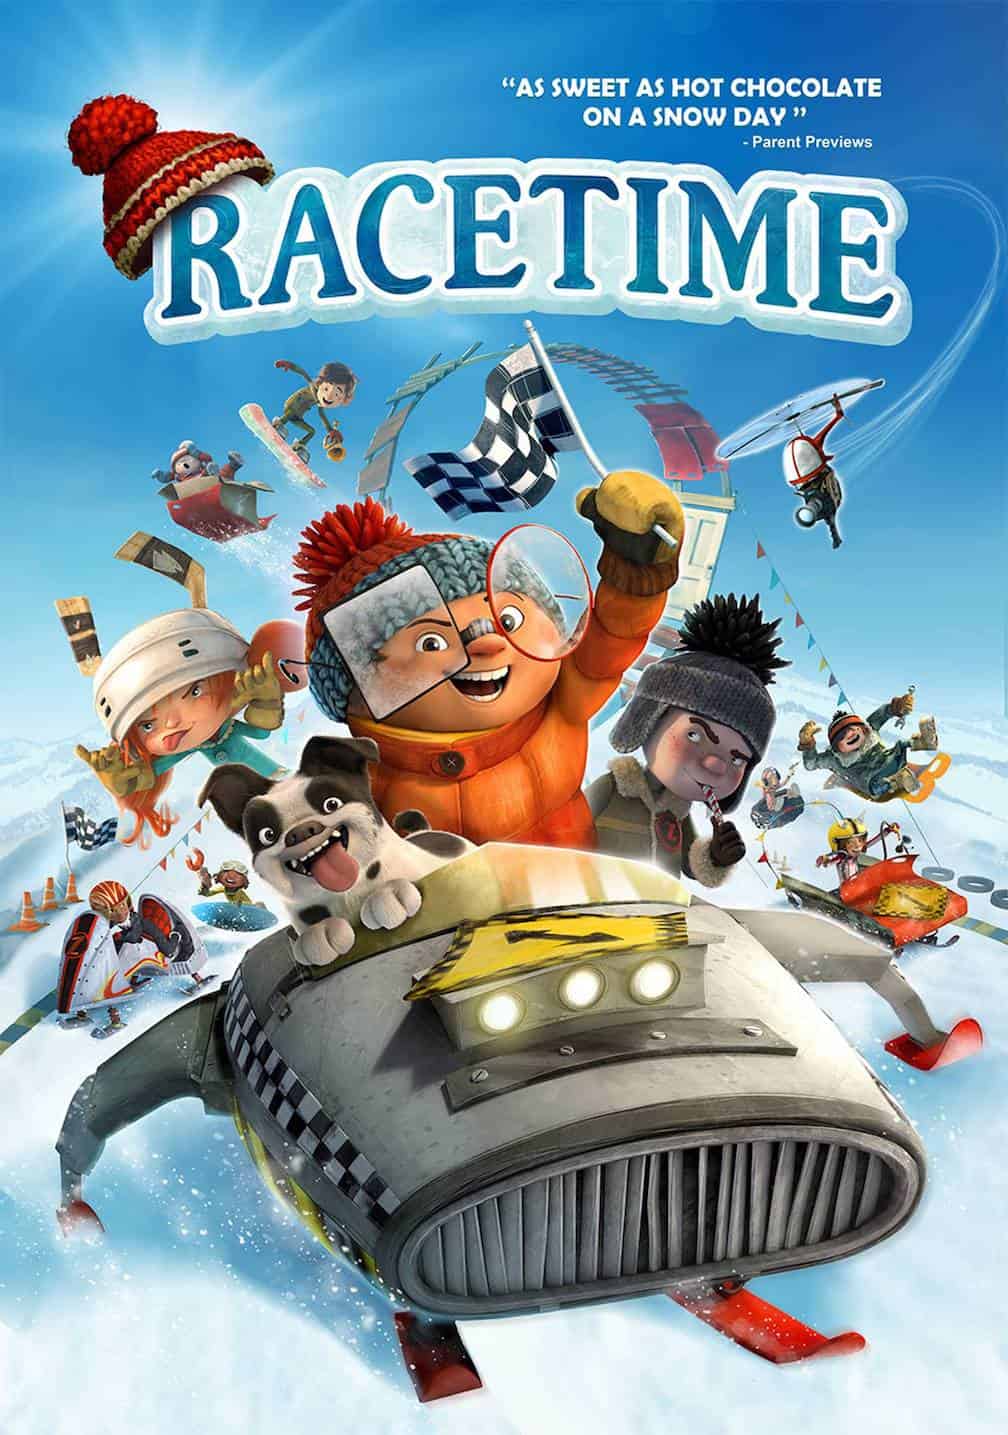 Racetime movie merchandise